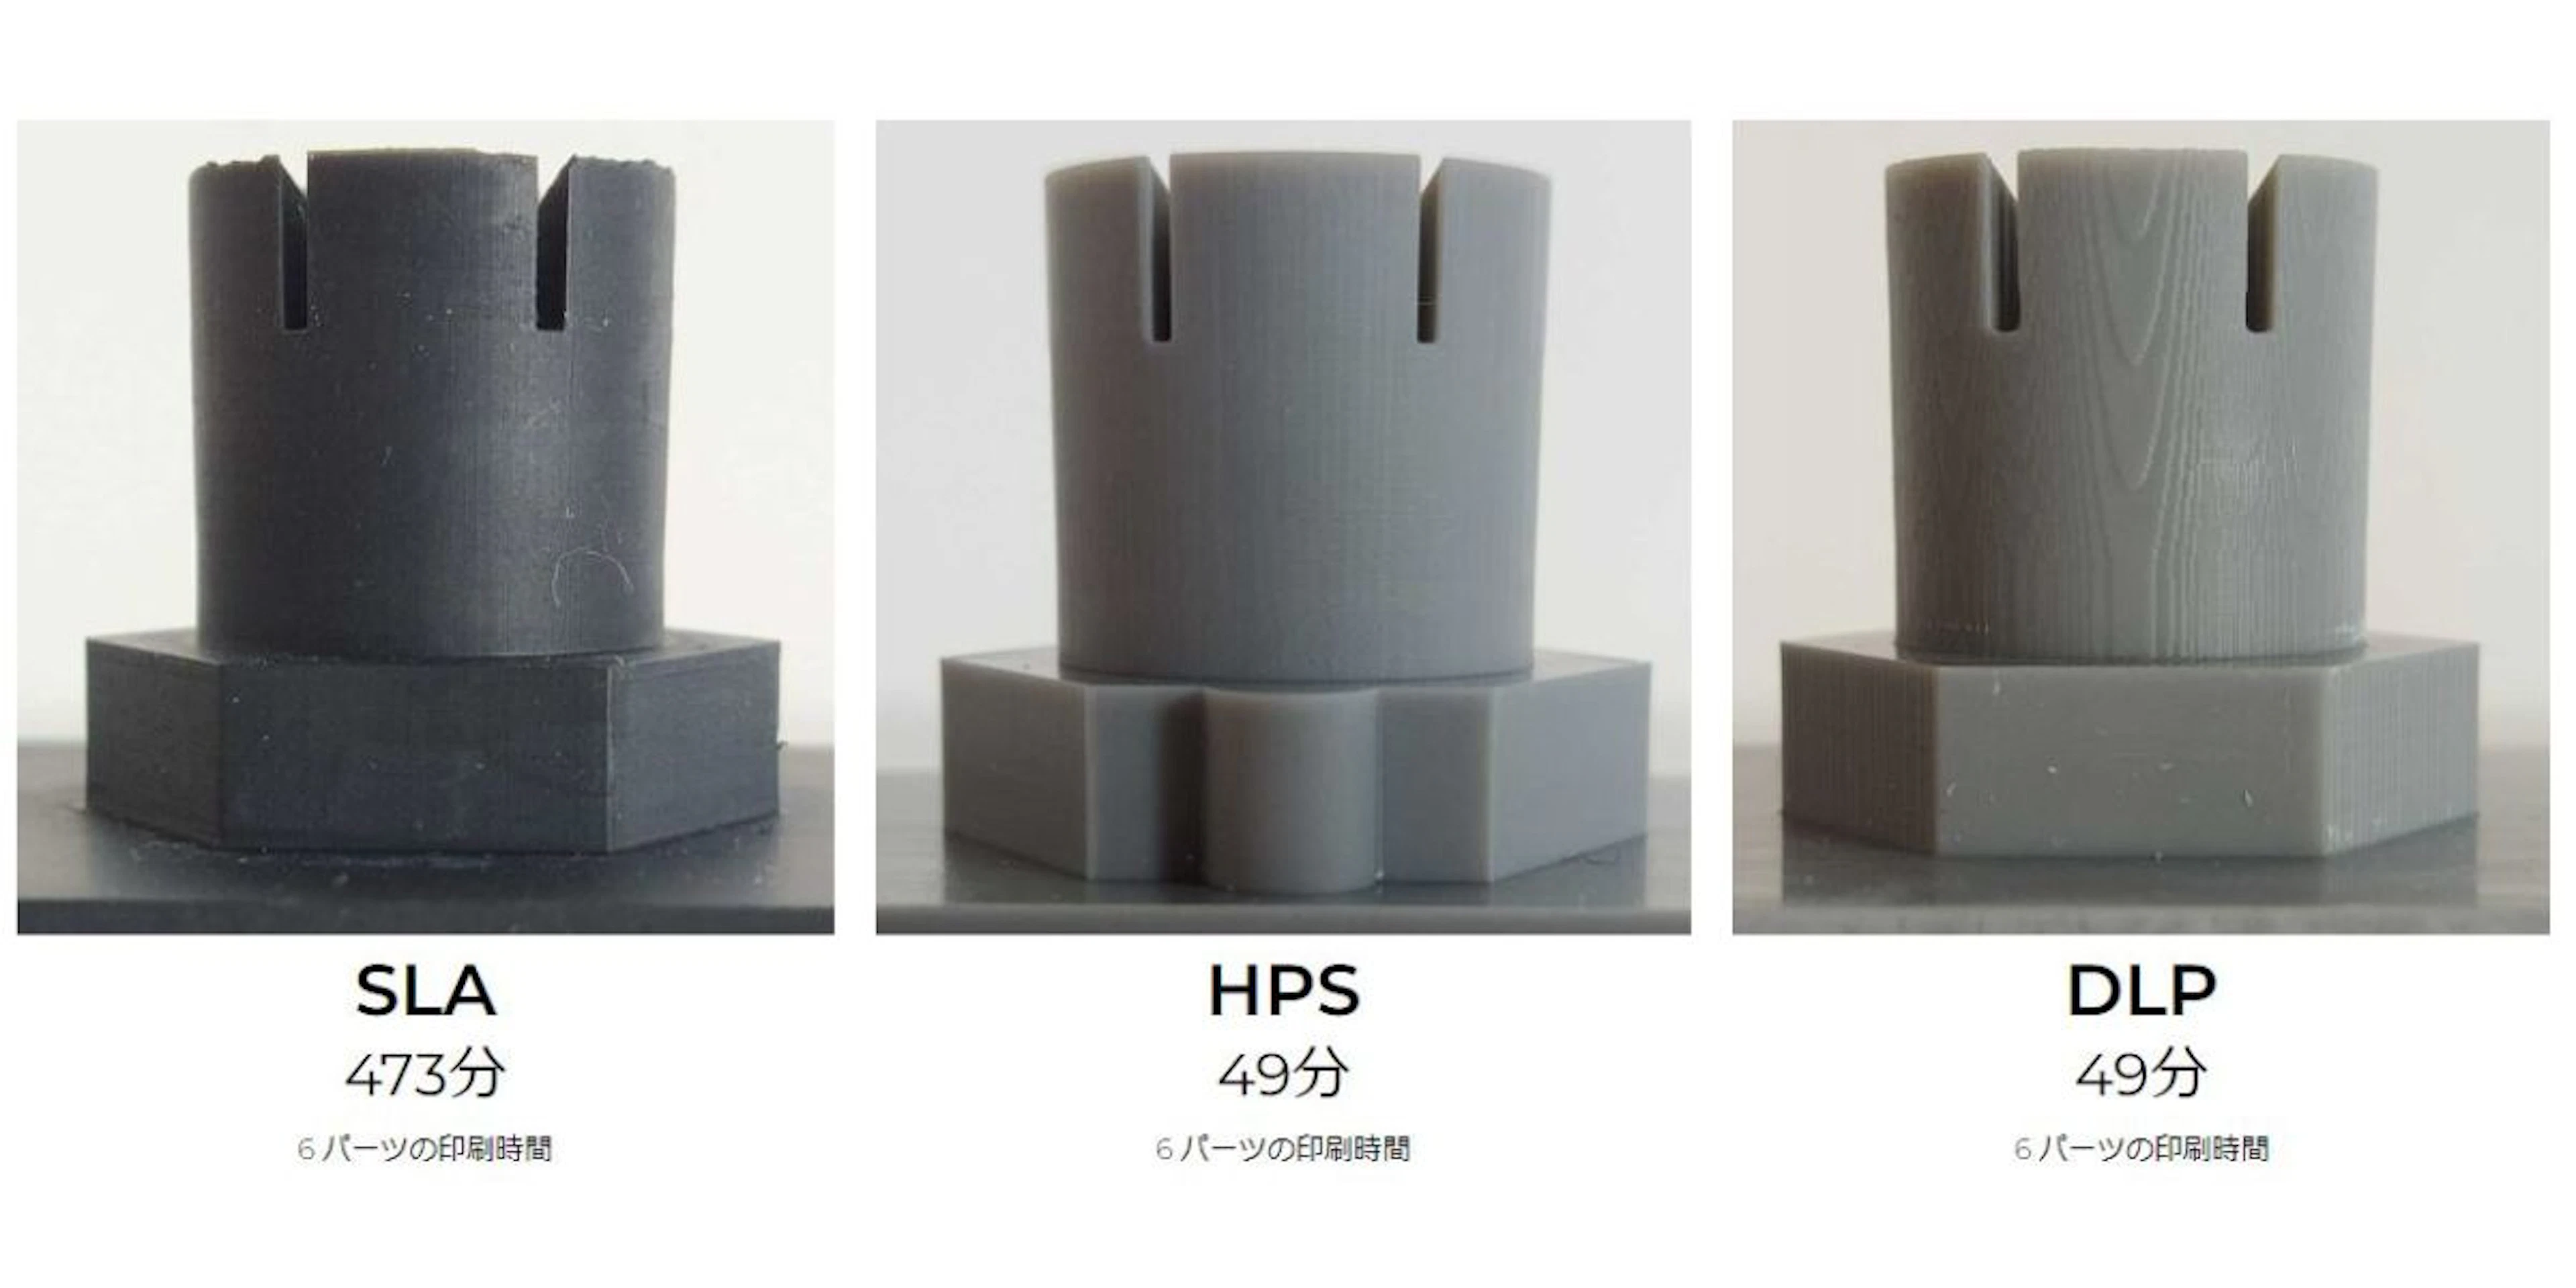  HPSはどの光造形方式より滑らかに造形可能です